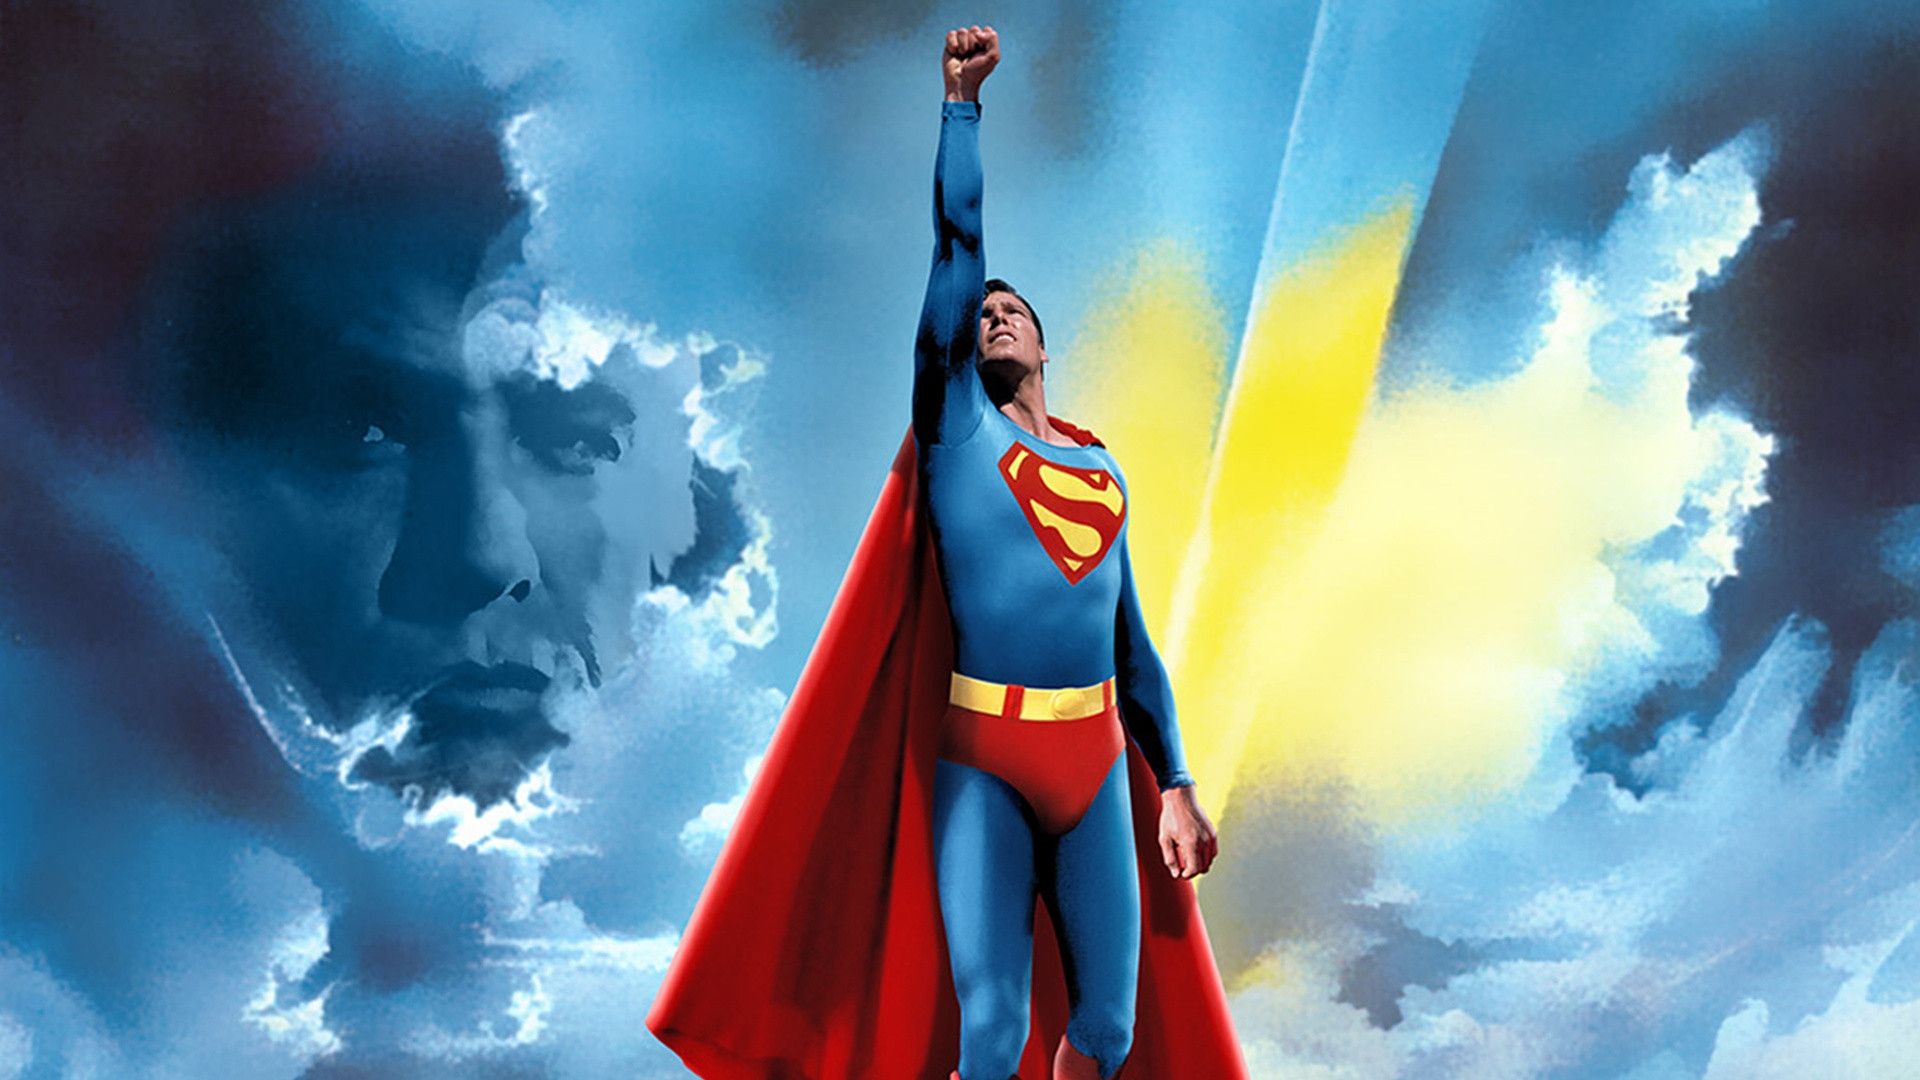 Superman Wallpaper Image para iPhone - Dibujos animados Fondos